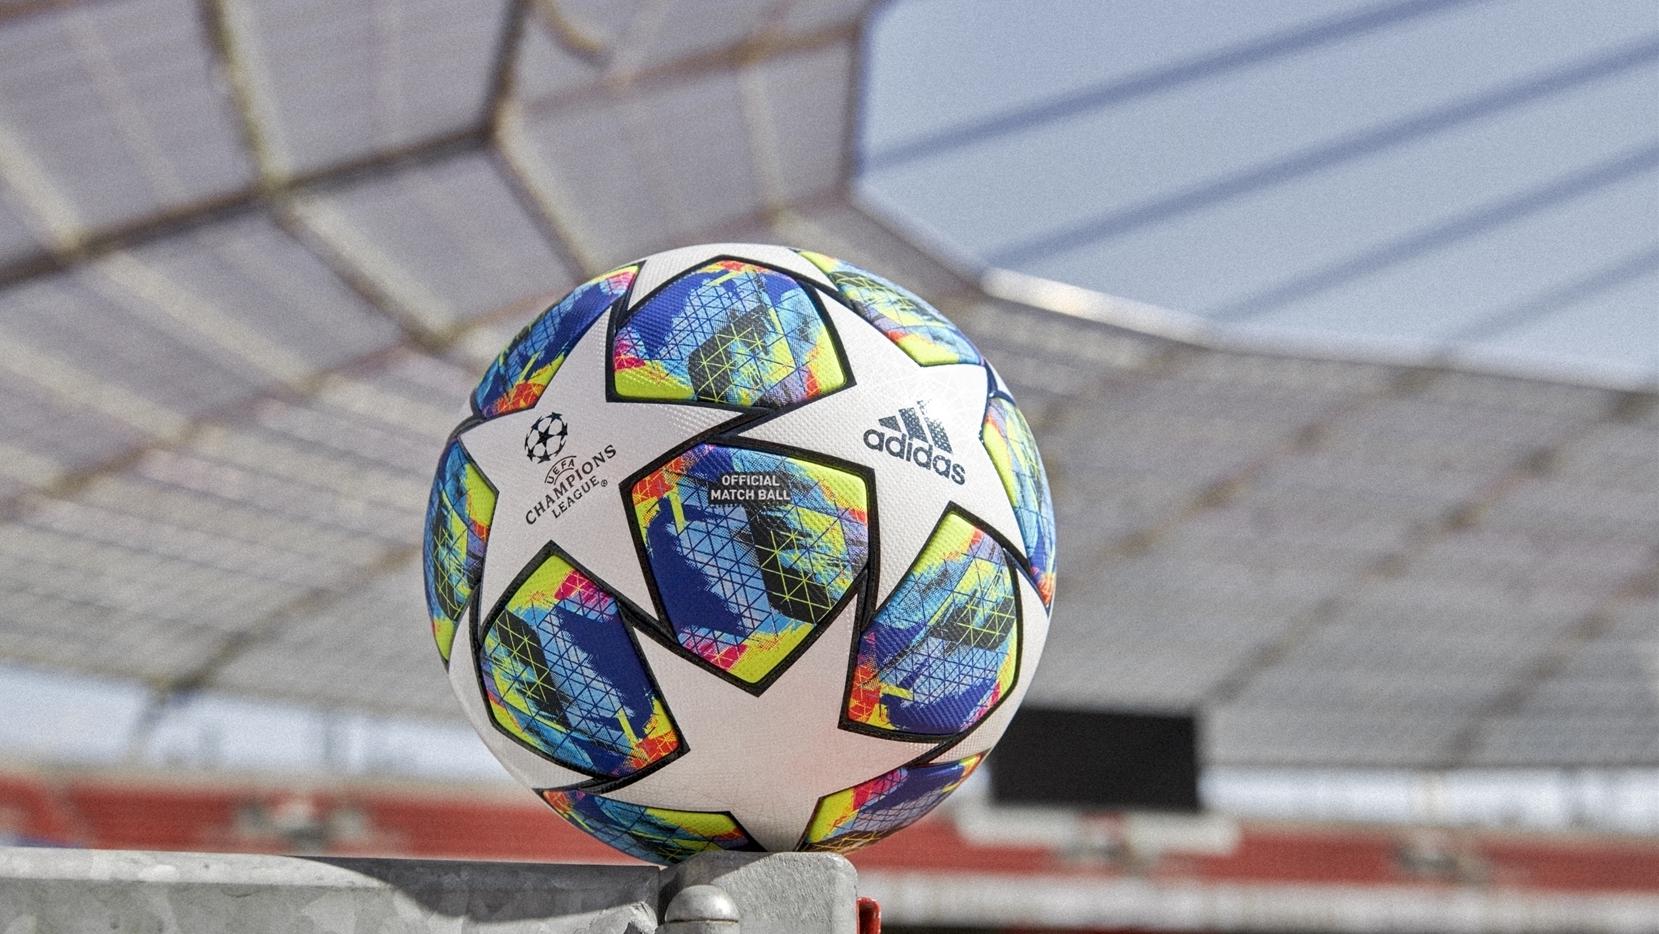 champions league 2019 soccer ball